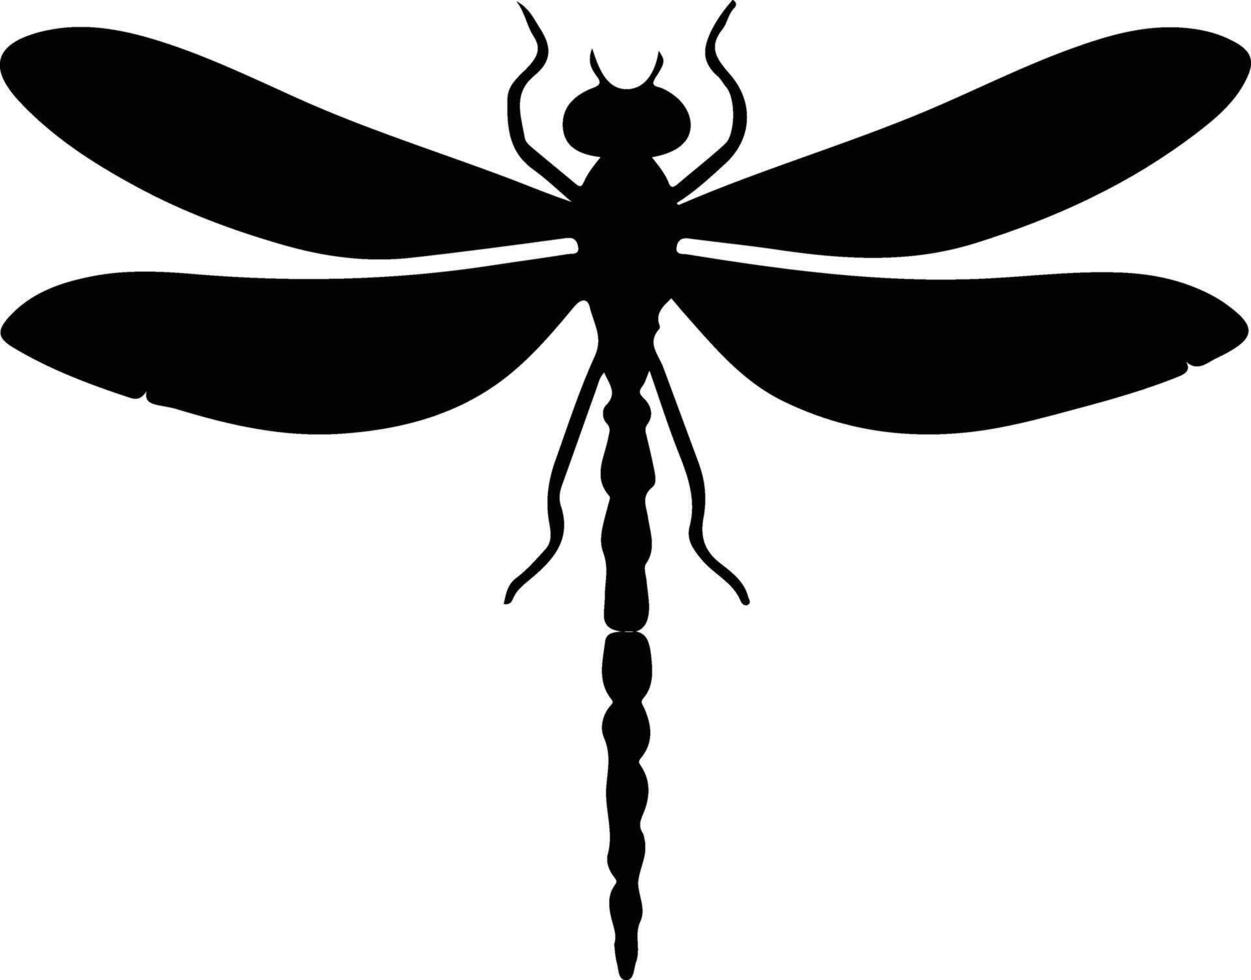 green darner dragonfly black silhouette vector